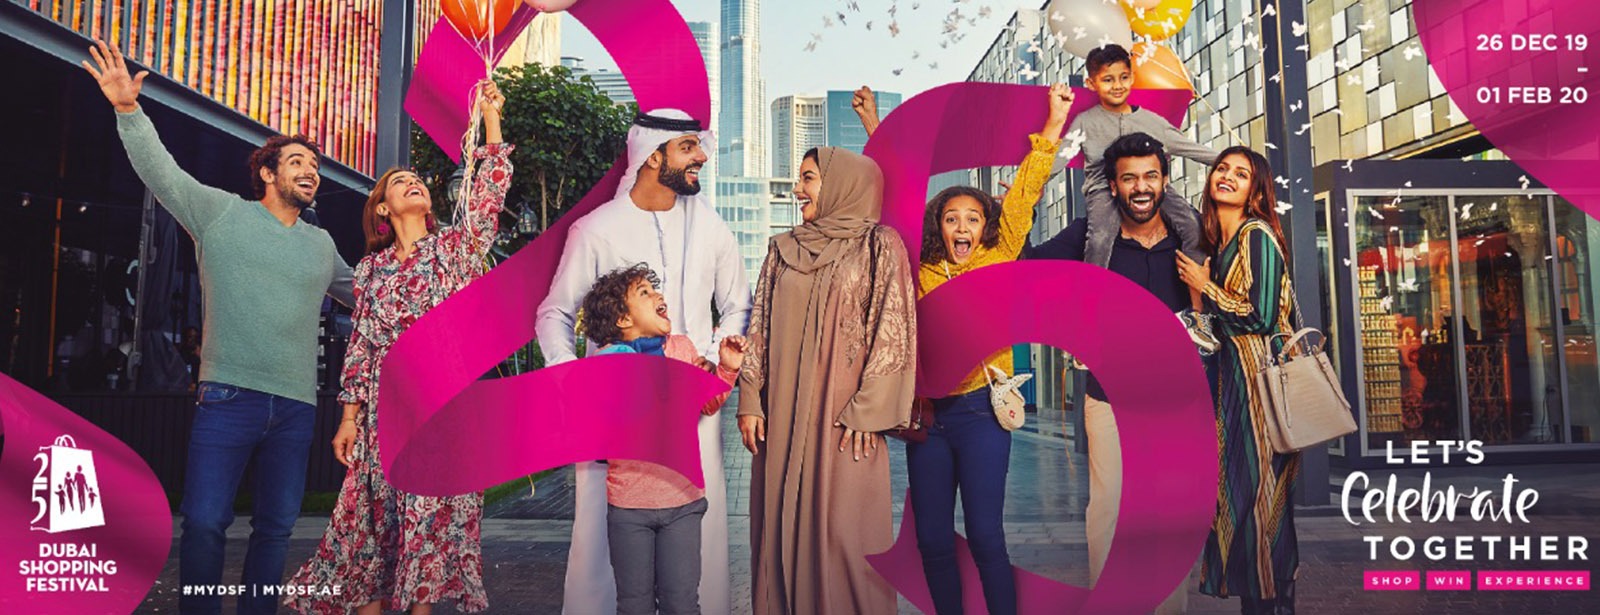 Dubai Shopping Festival 2019-2020 - Coming Soon in UAE